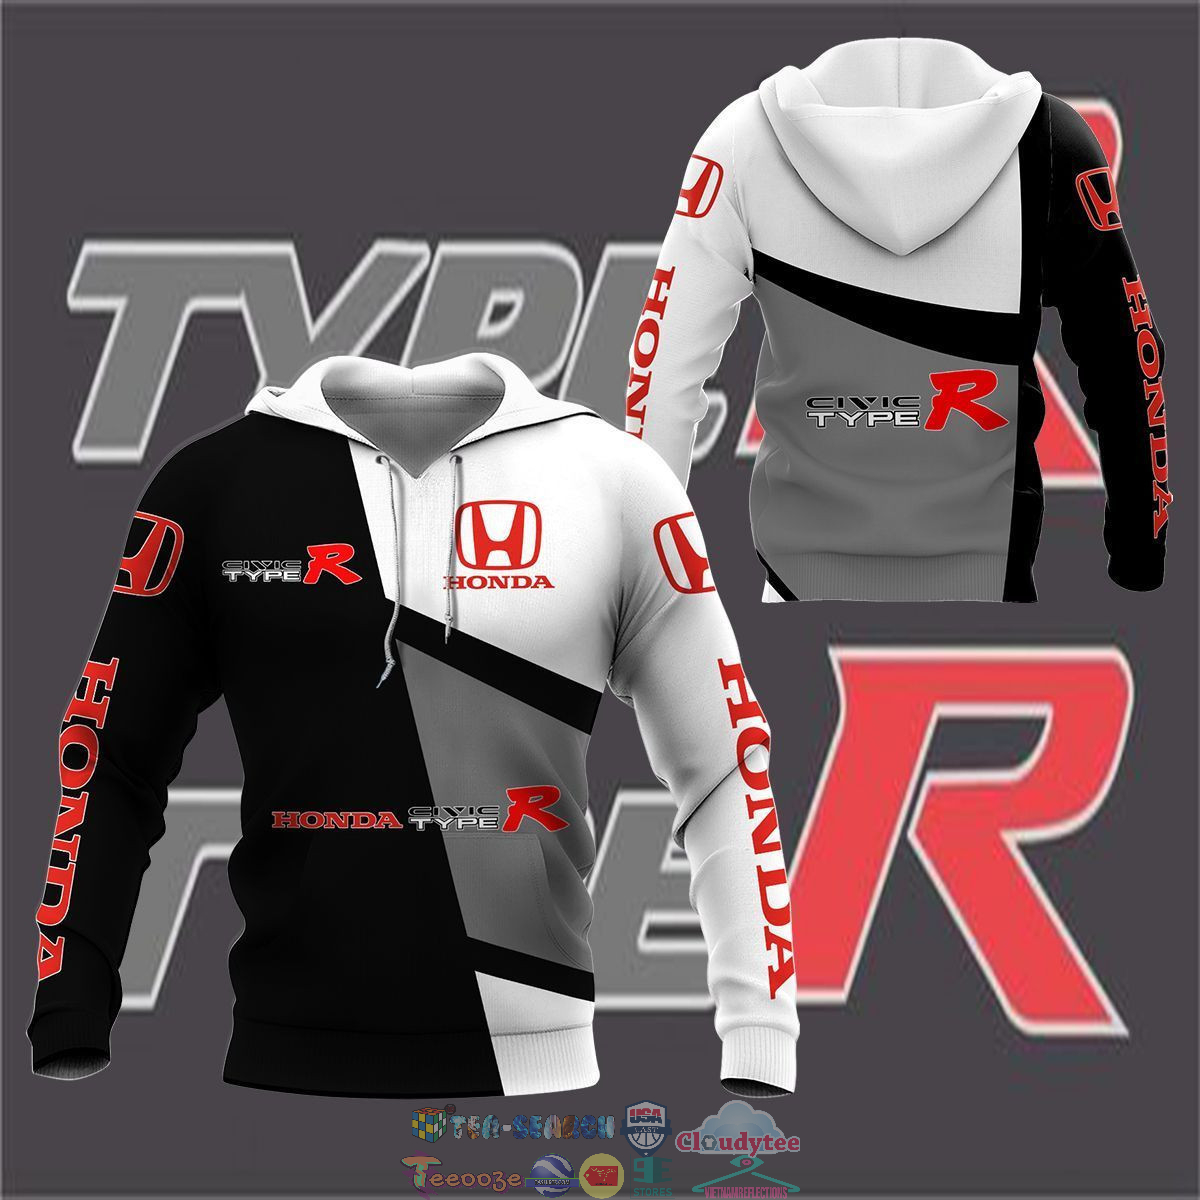 Honda Civic Type R ver 2 3D hoodie and t-shirt – Saleoff